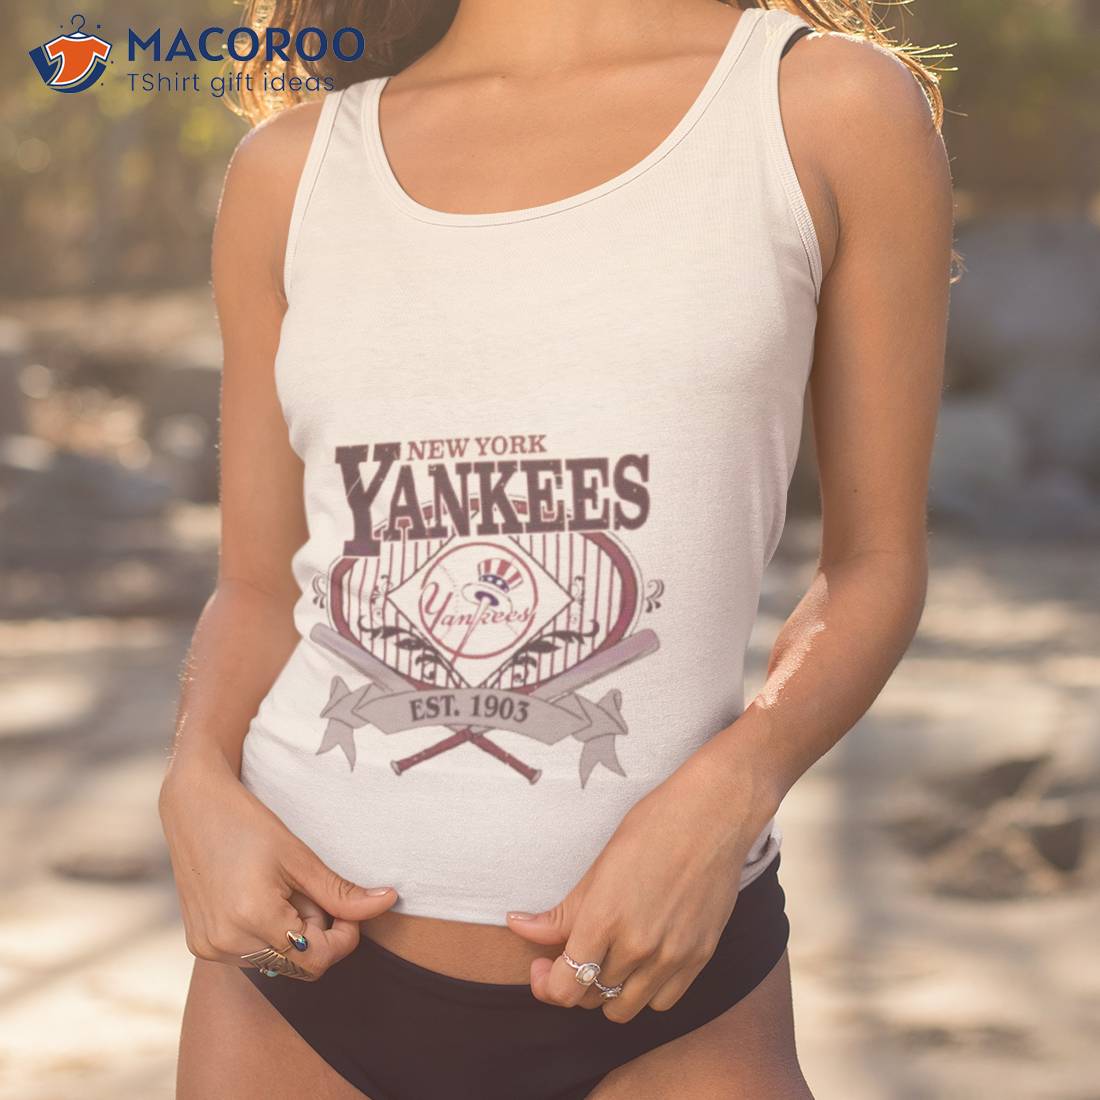 https://images.macoroo.com/wp-content/uploads/2023/05/new-york-yankees-sports-est-1903-shirt-tank-top-1.jpg